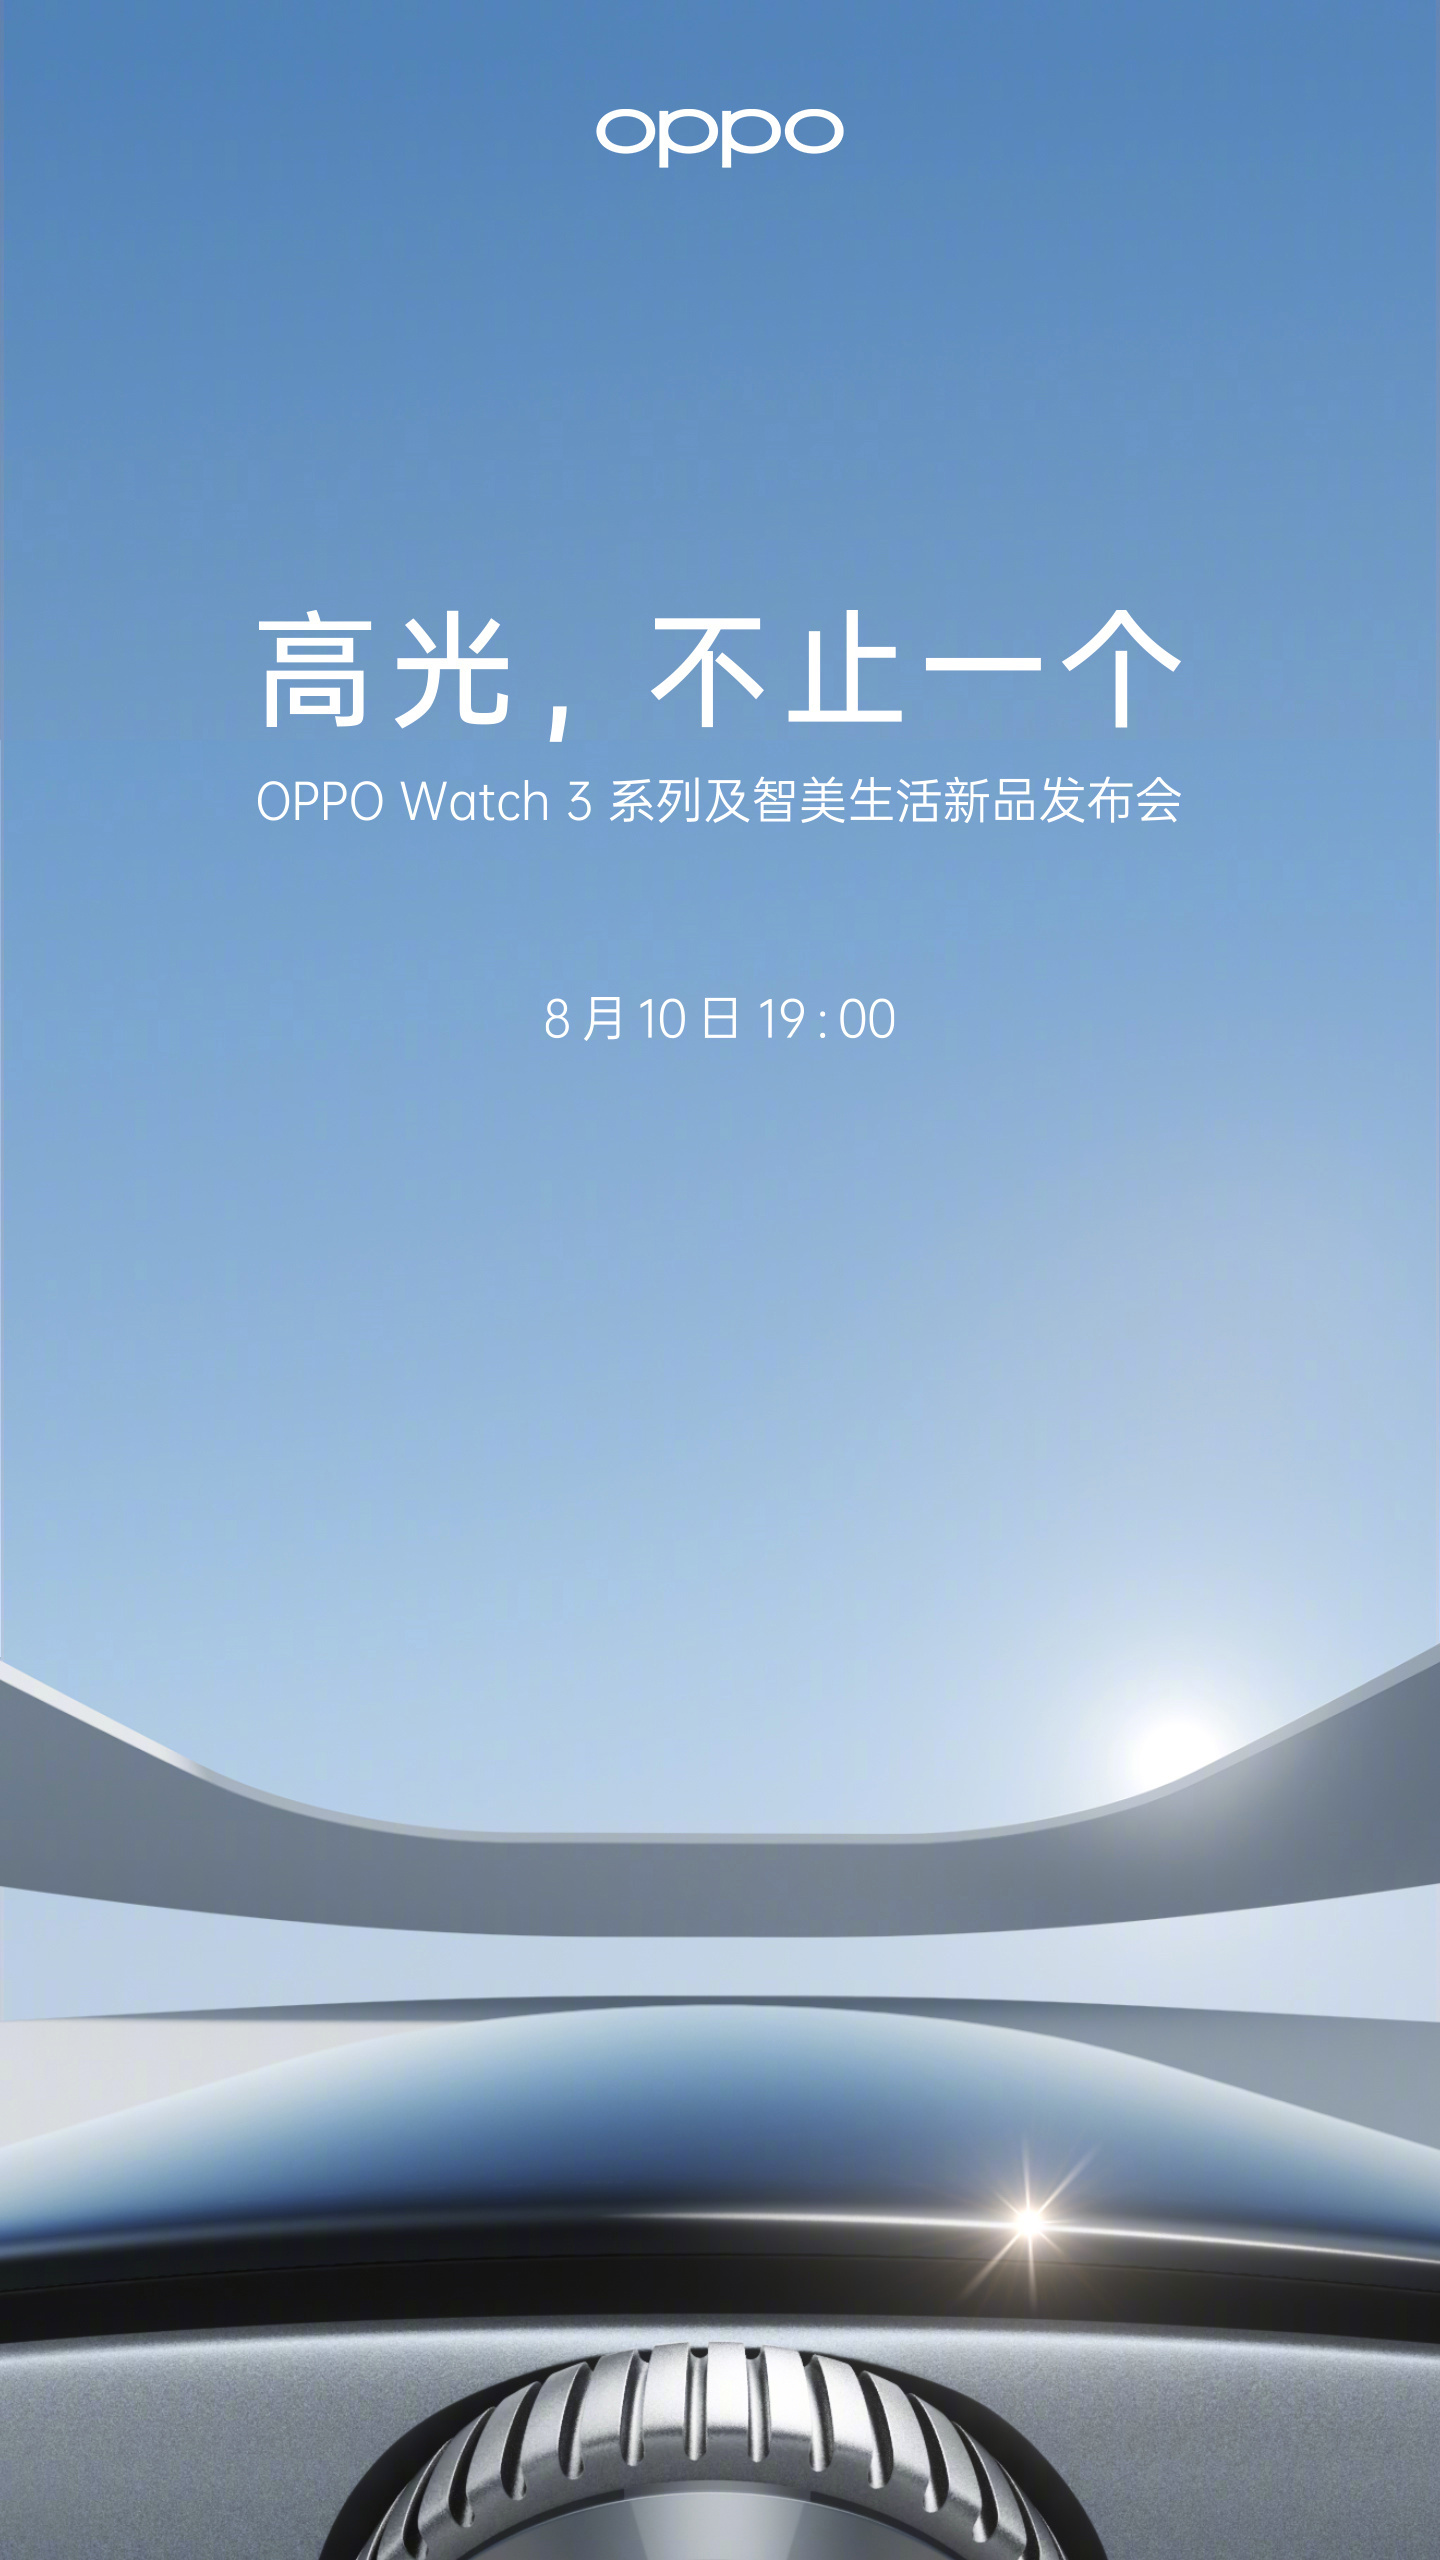 OPPO Watch 3 系列官宣将于8 月10日发布